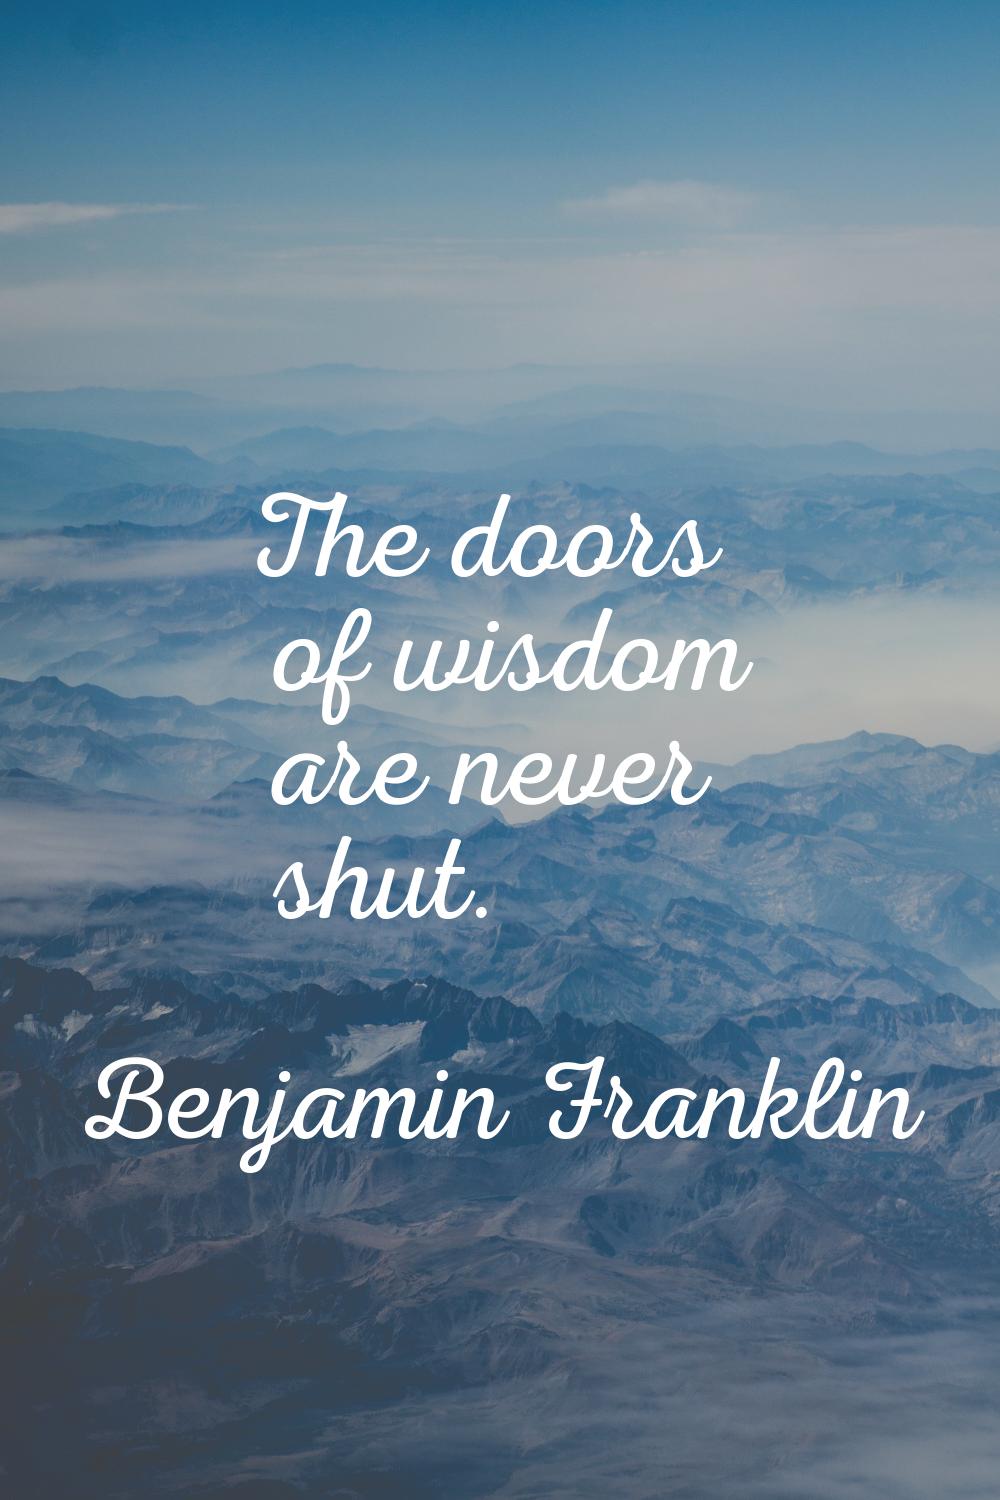 The doors of wisdom are never shut.